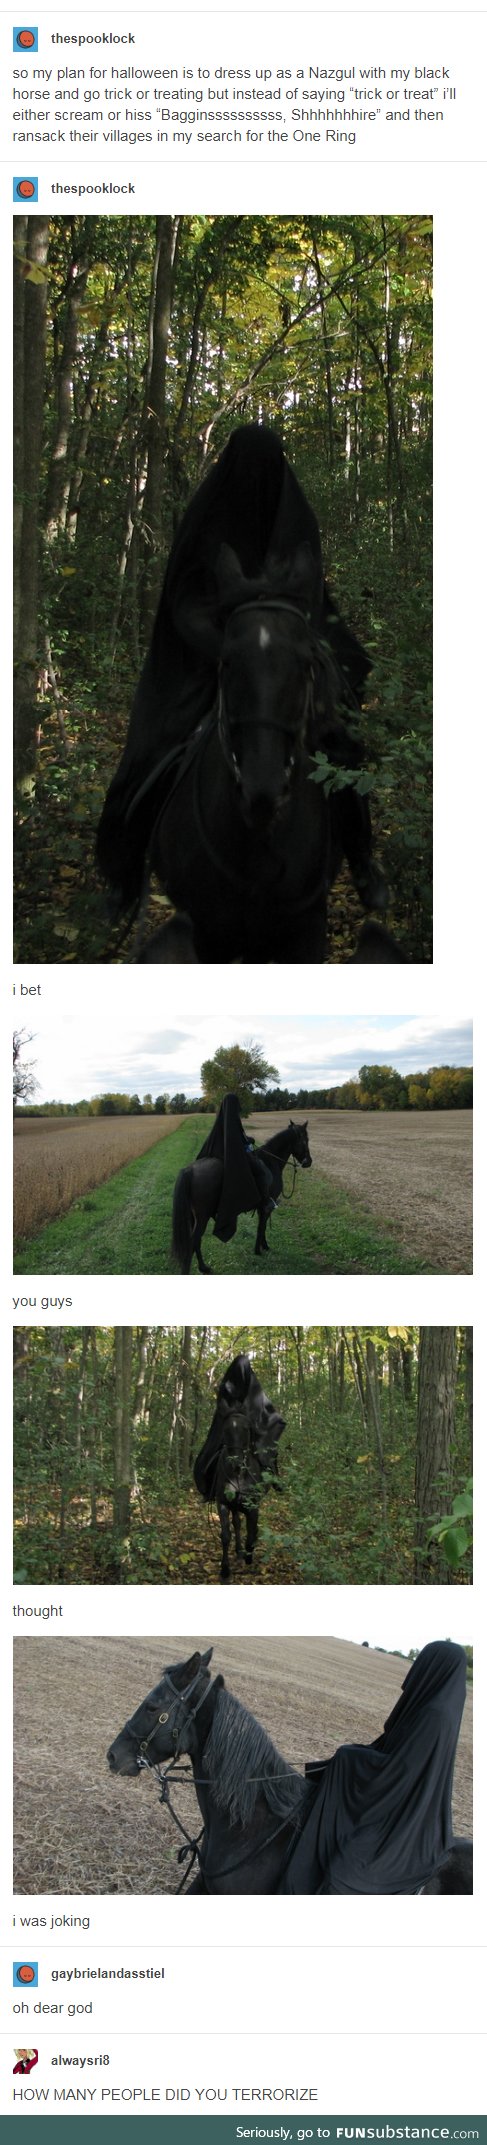 If I had a black horse